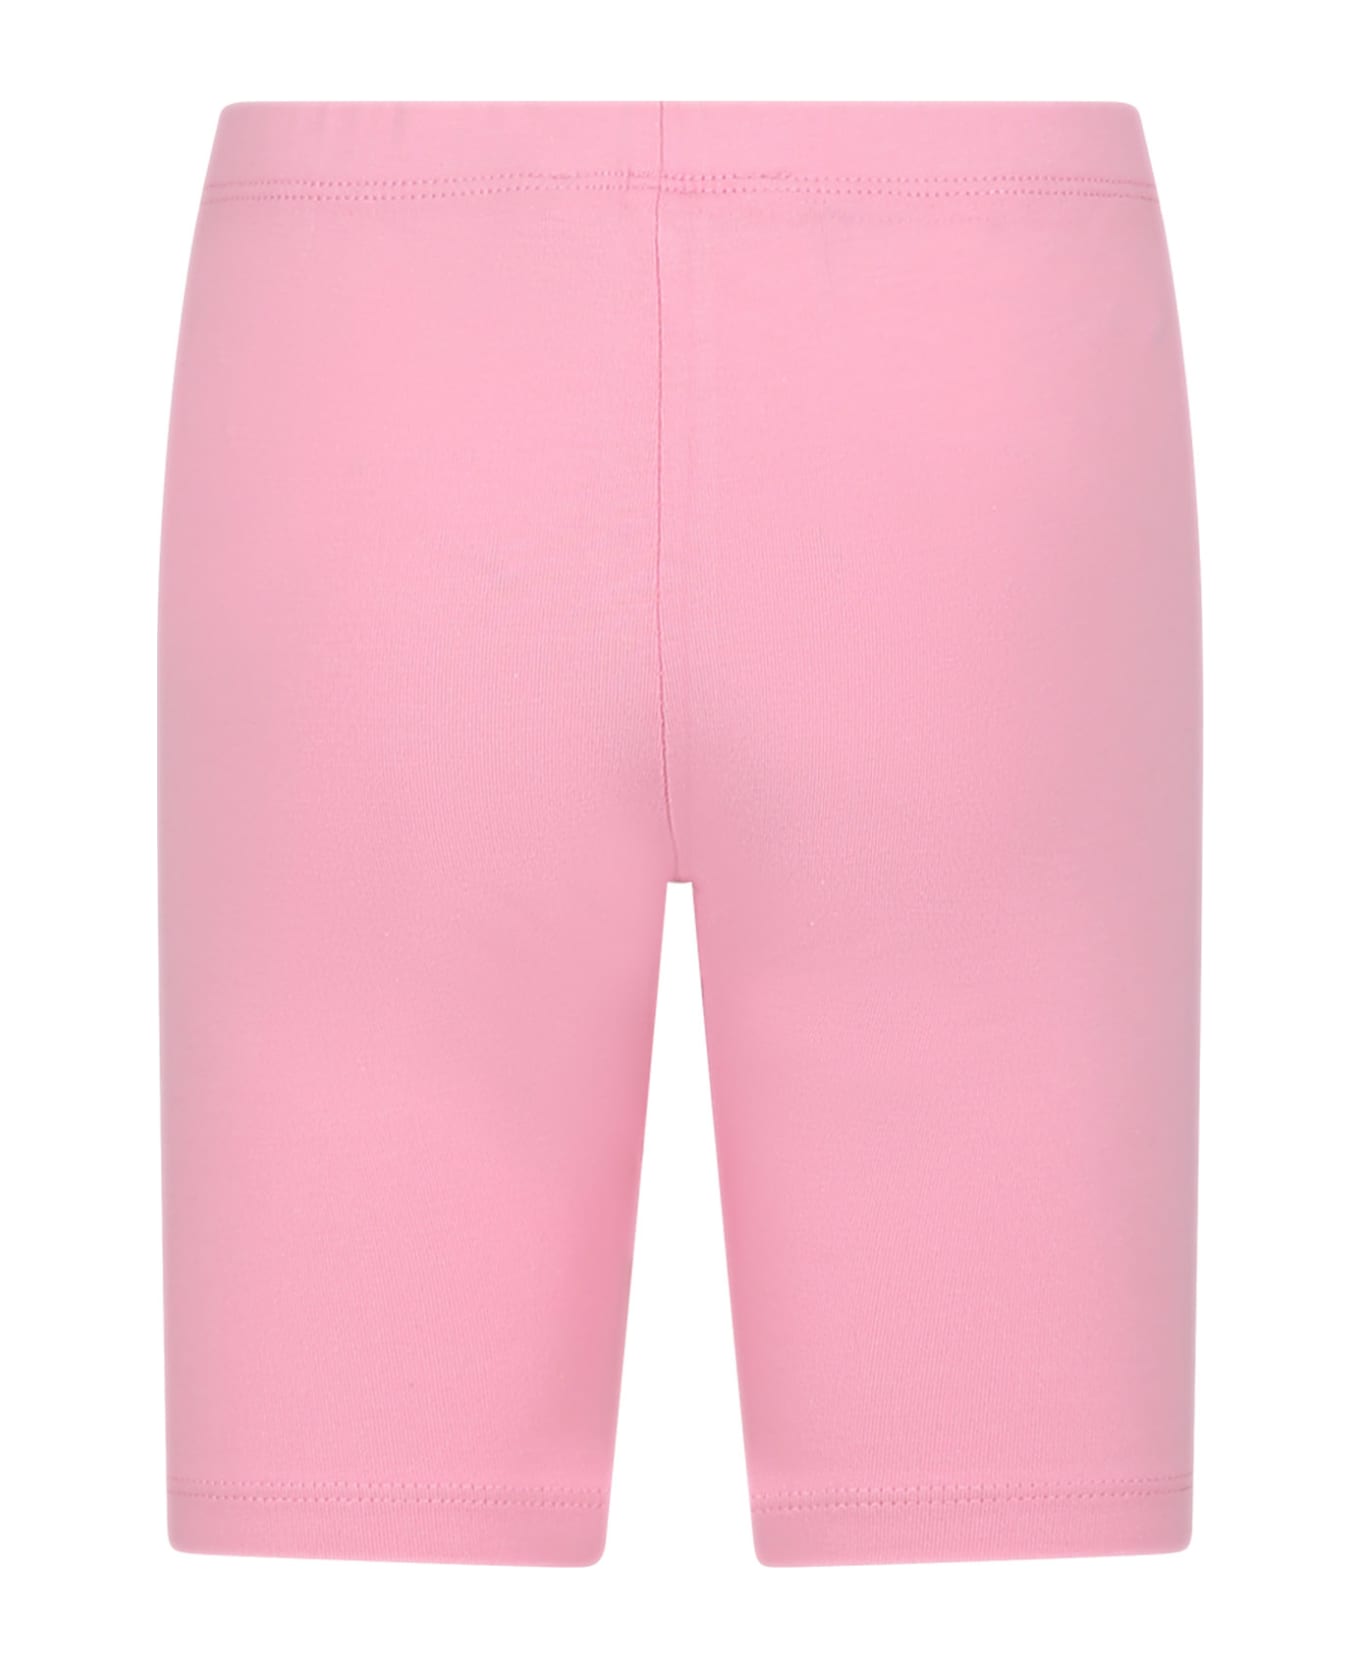 Marni Pink Sports Shorts For Girl - Pink